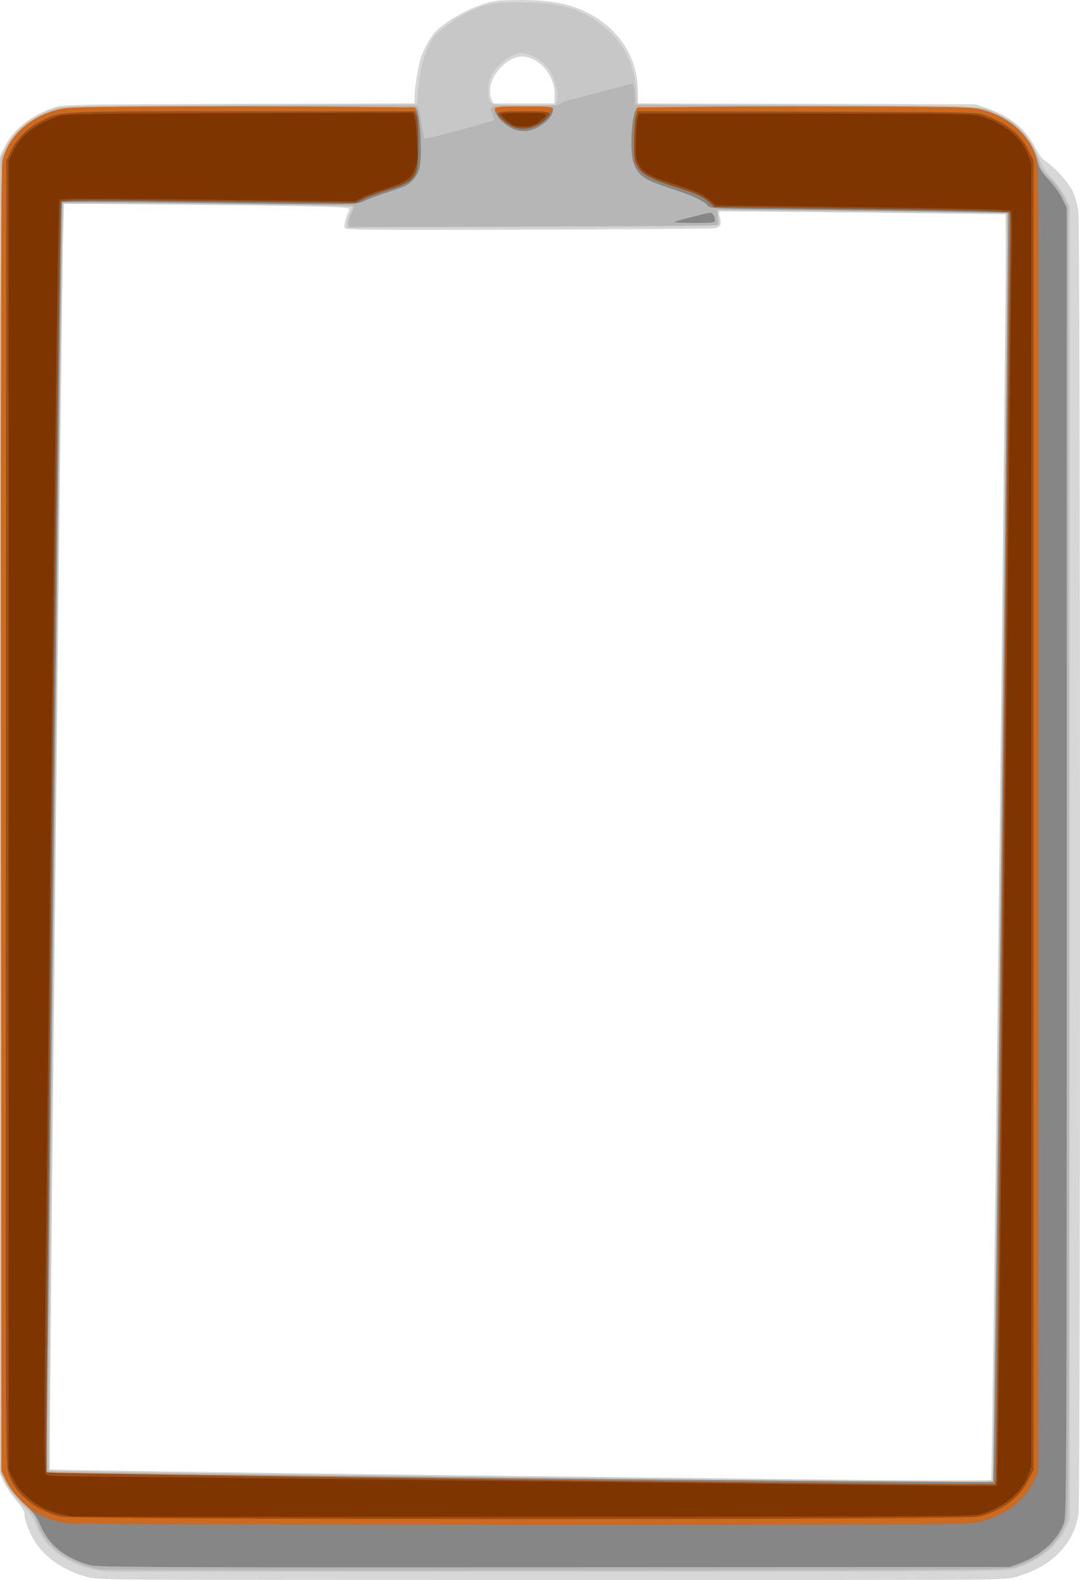 Clipboard Background png transparent